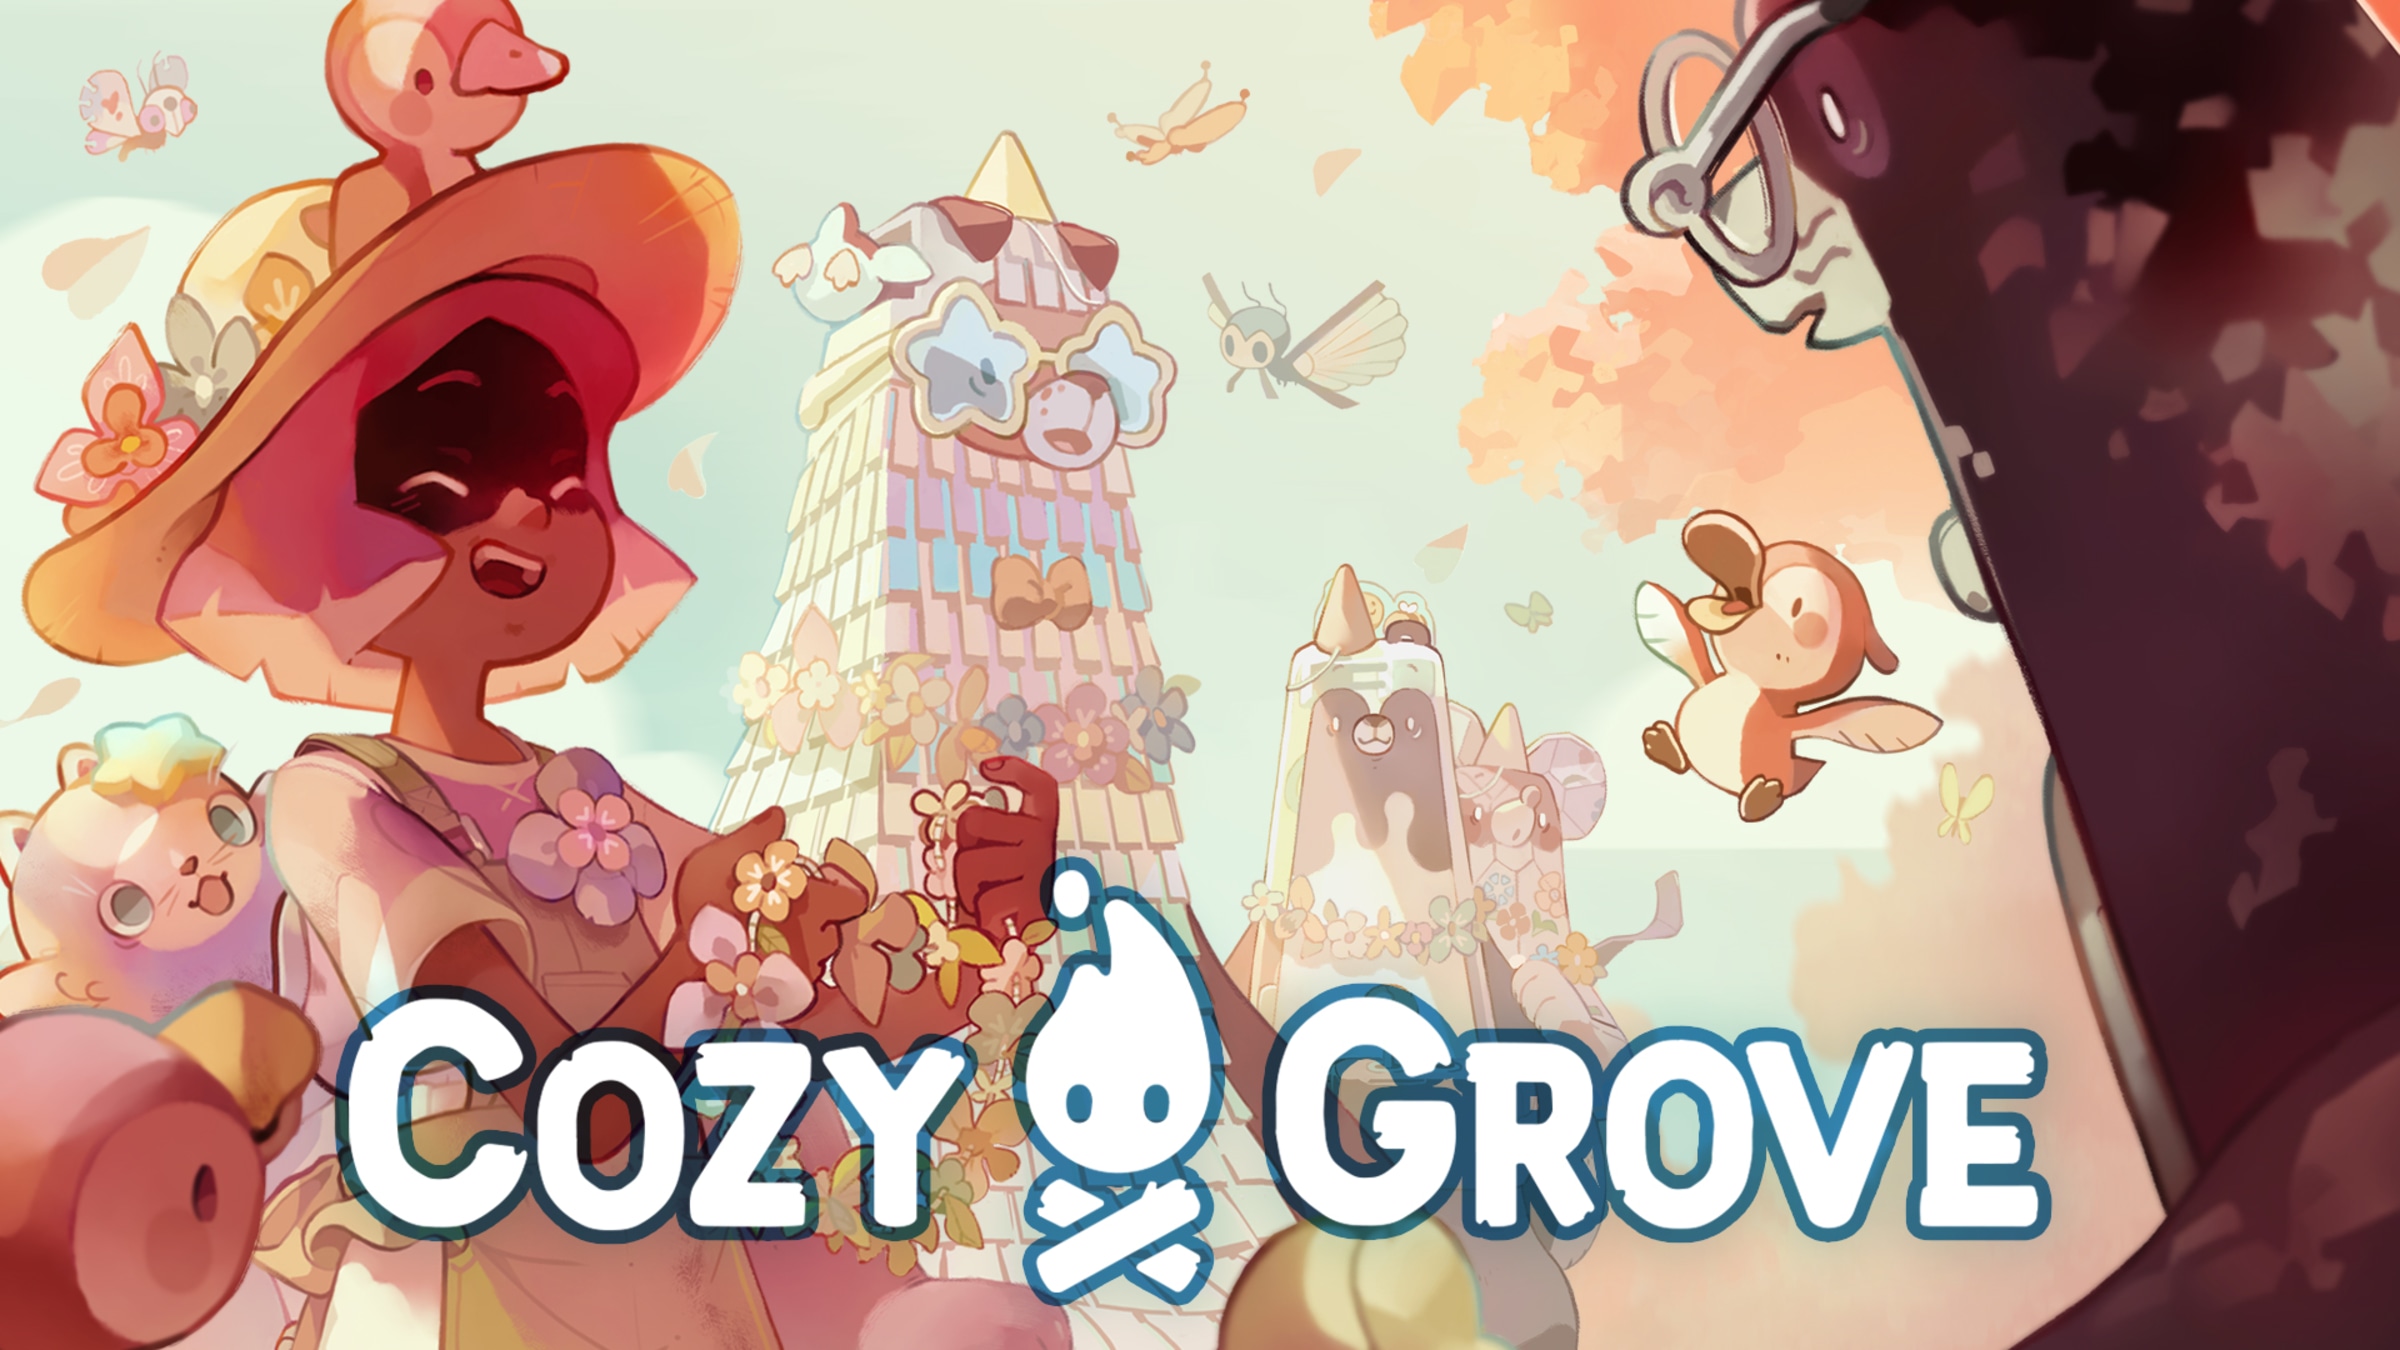 Cozy Grove 2 announced